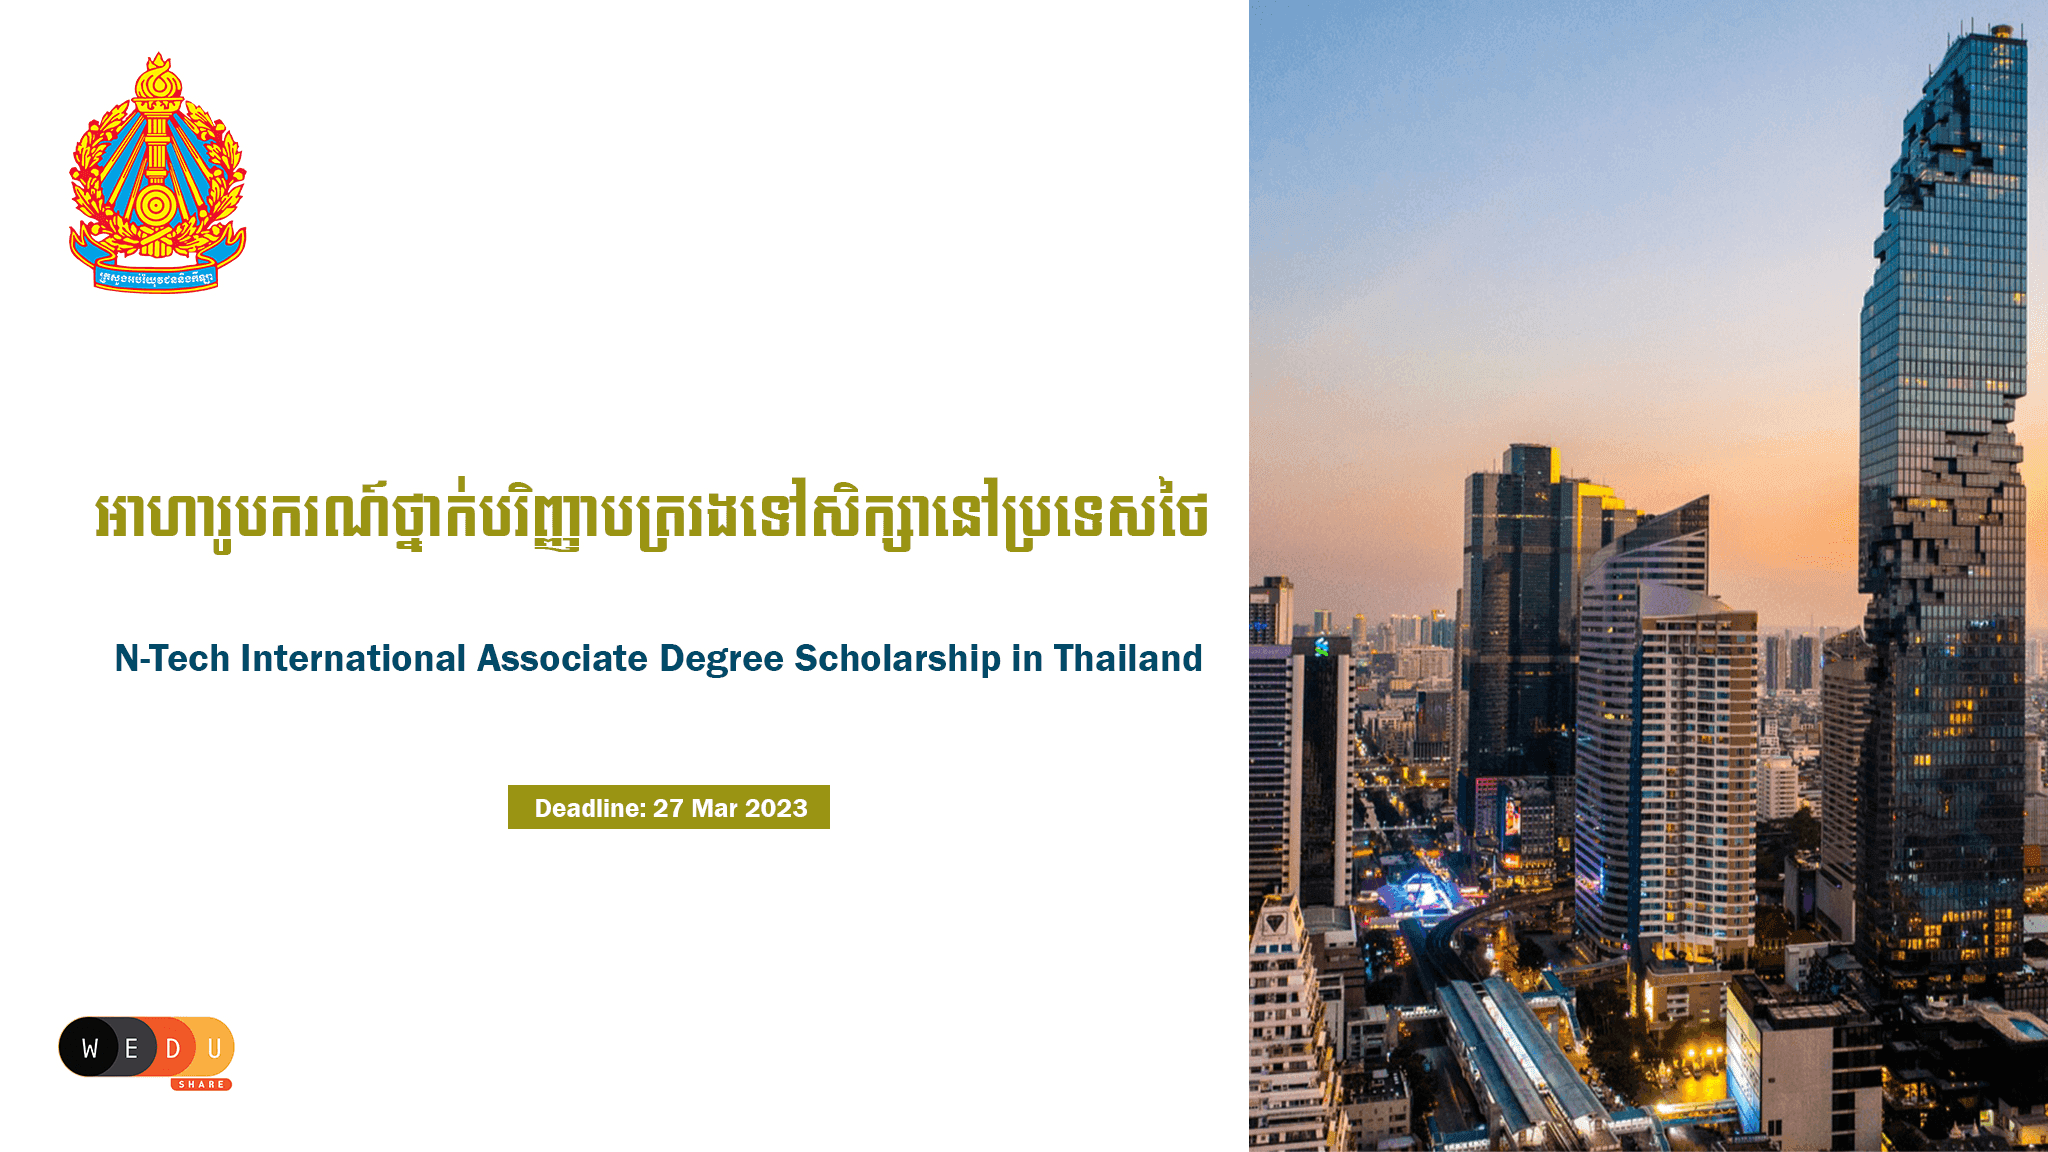 N-Tech International Associate Degree Scholarship in Thailand